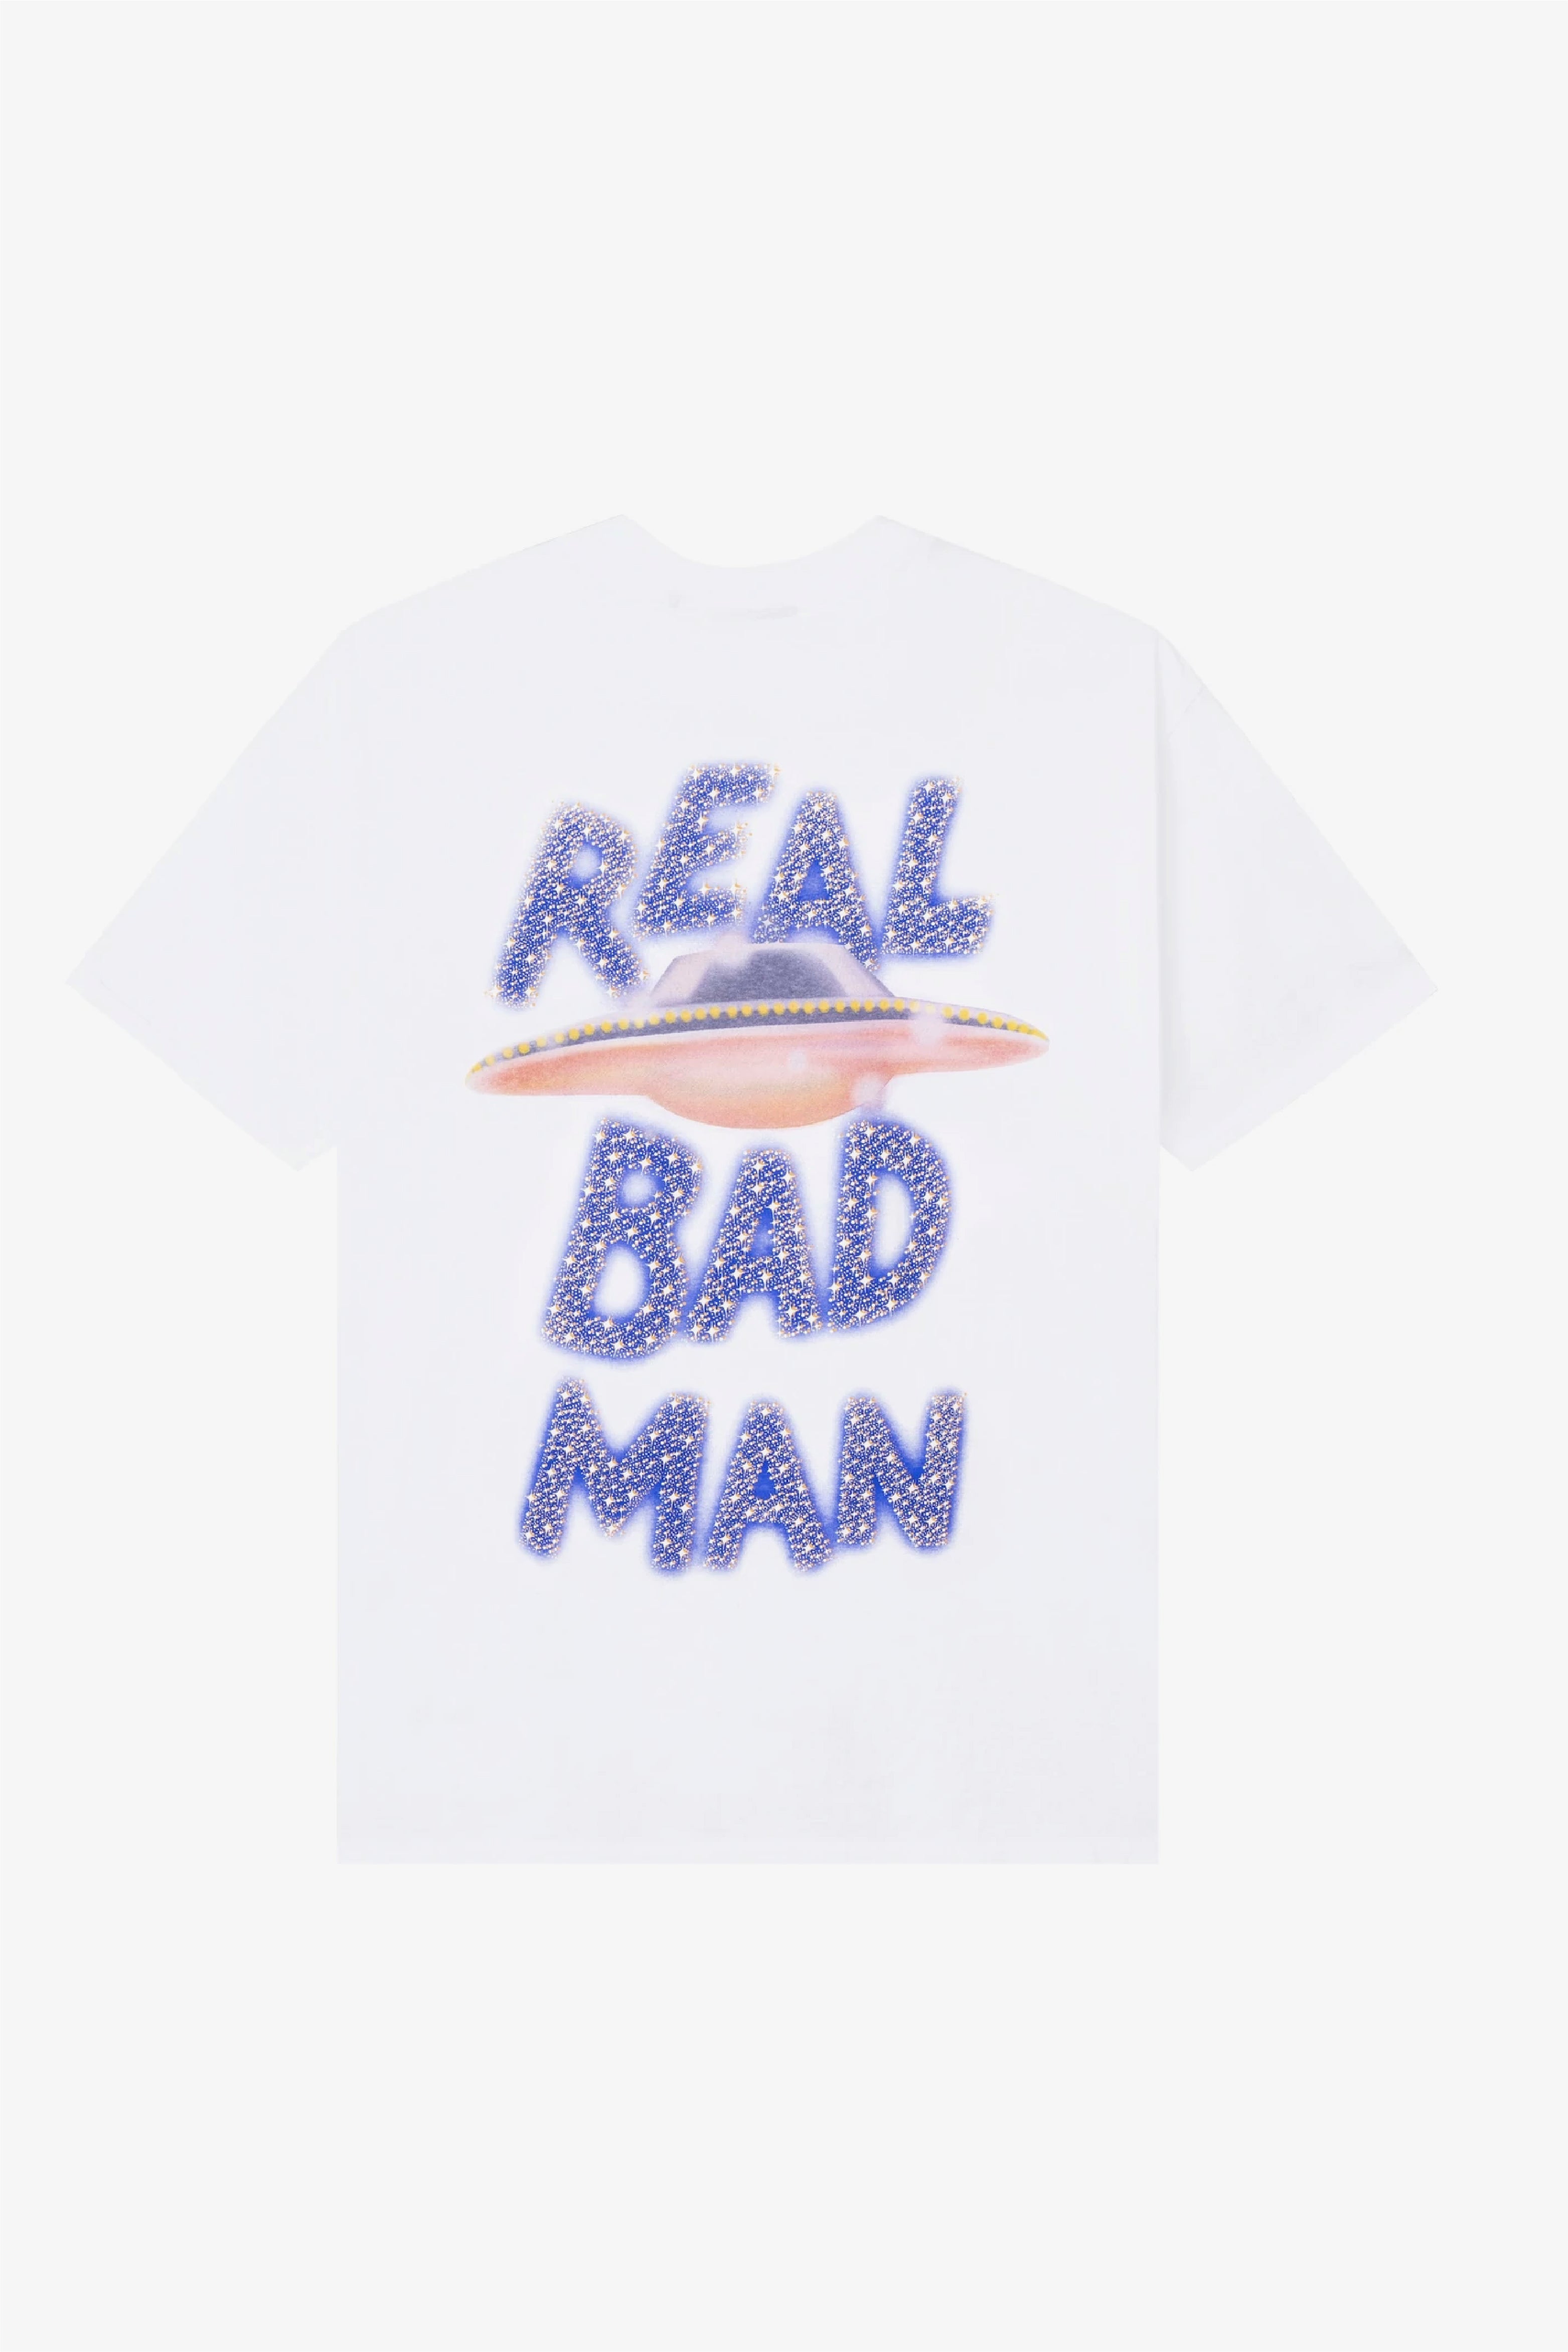 Selectshop FRAME - REAL BAD MAN Saucer Cult Tee T-Shirts Dubai